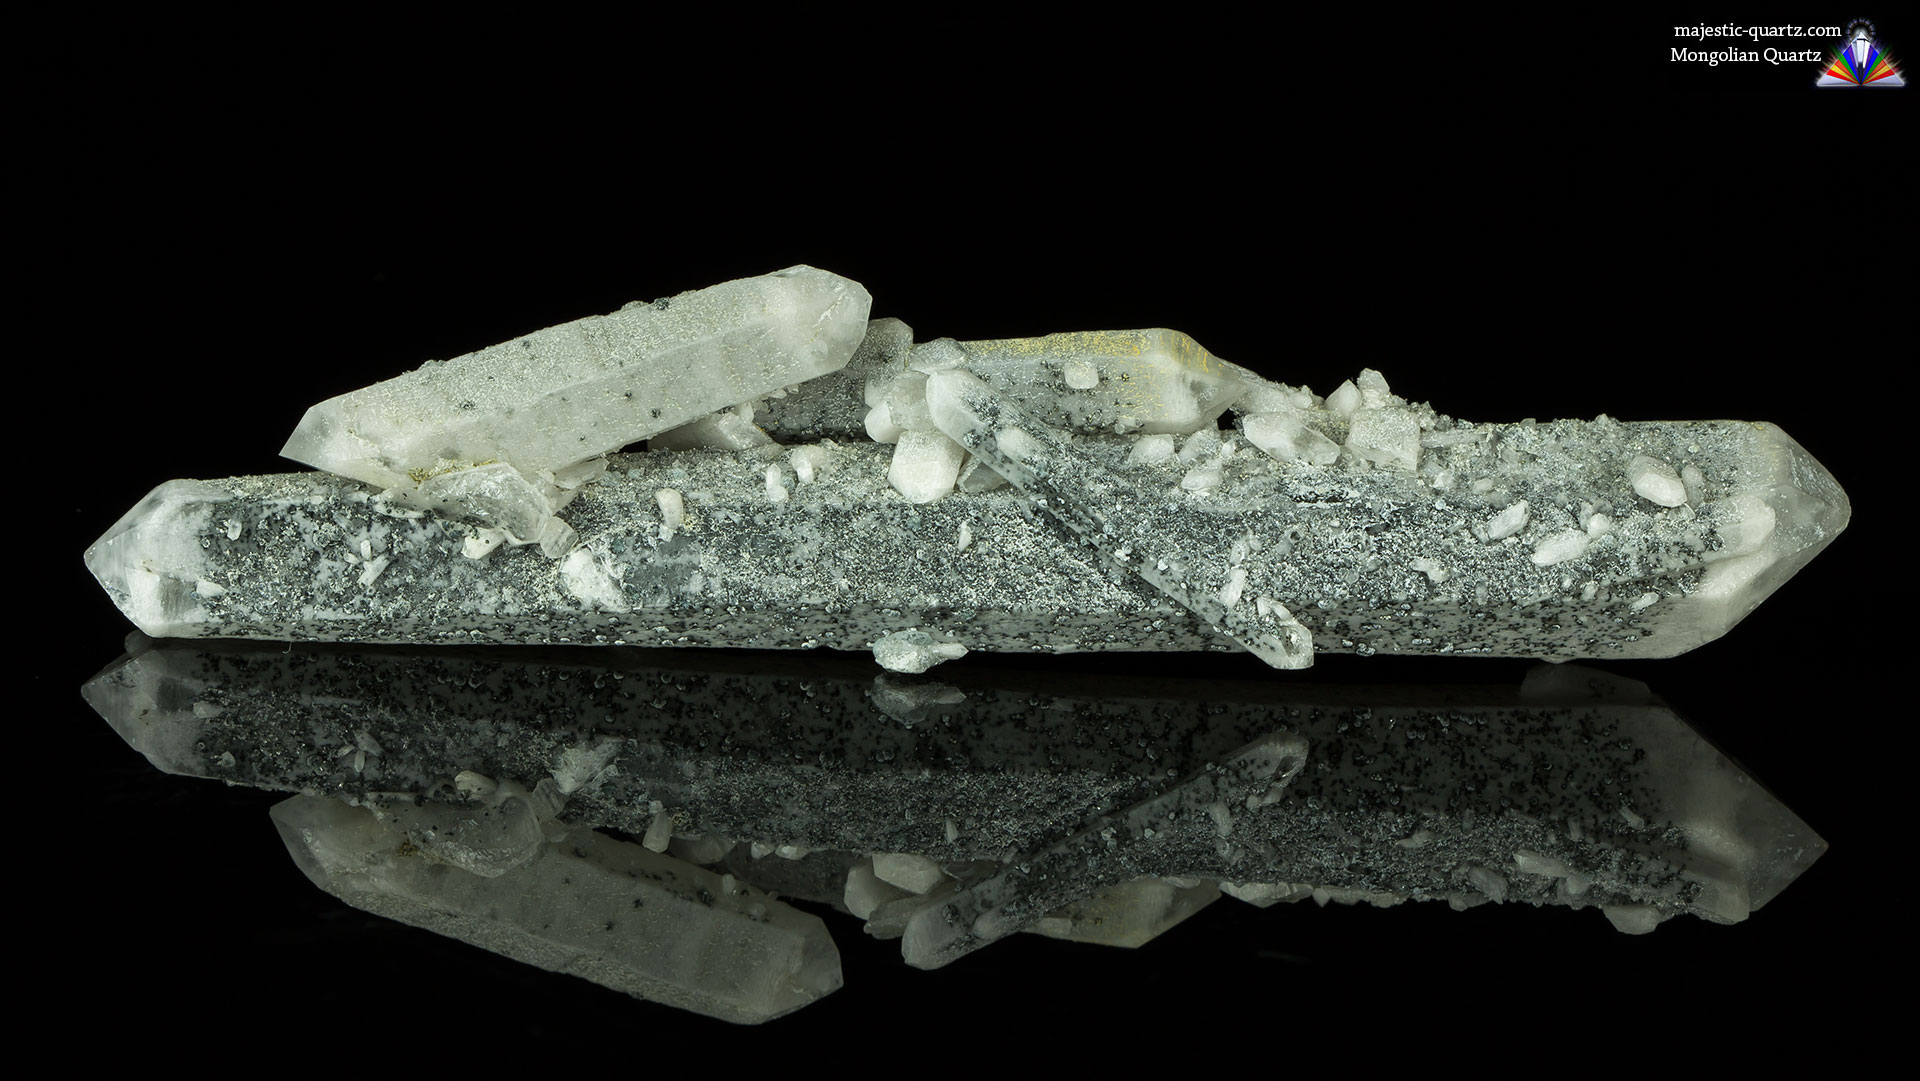 Large Inner Mongolian Elestial Quartz Dolomite Hematite Coated Terminated Natural Crystal Unpolished Pineapple Quartz Cluster